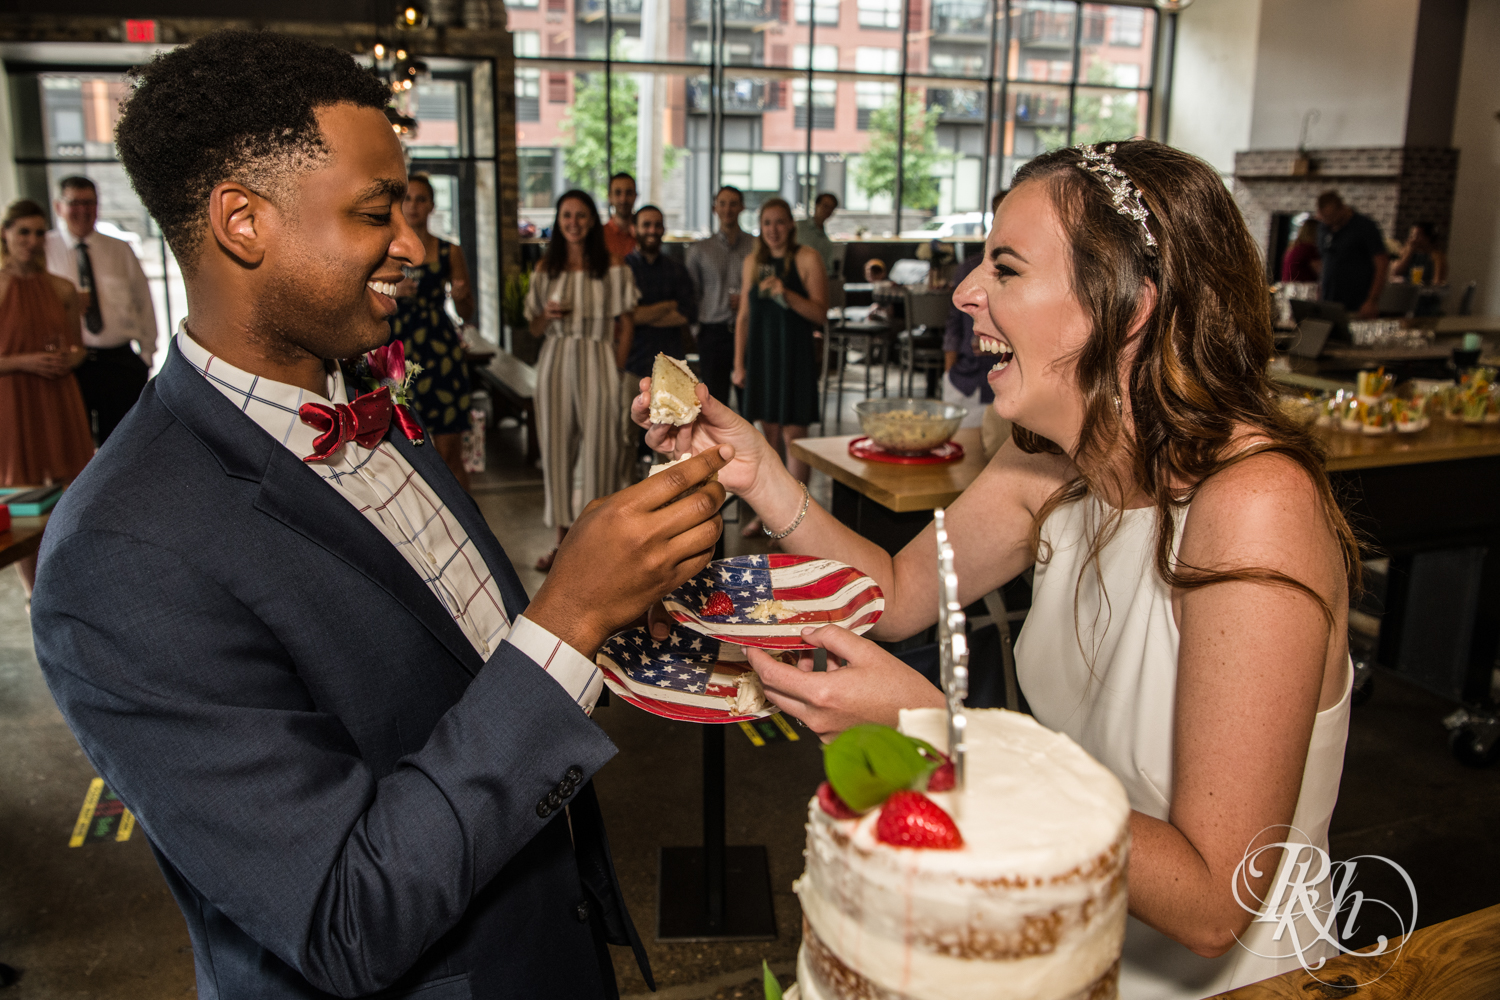 Black man and woman biracial couple eat wedding cake at wedding reception in Minneapolis, Minnesota.